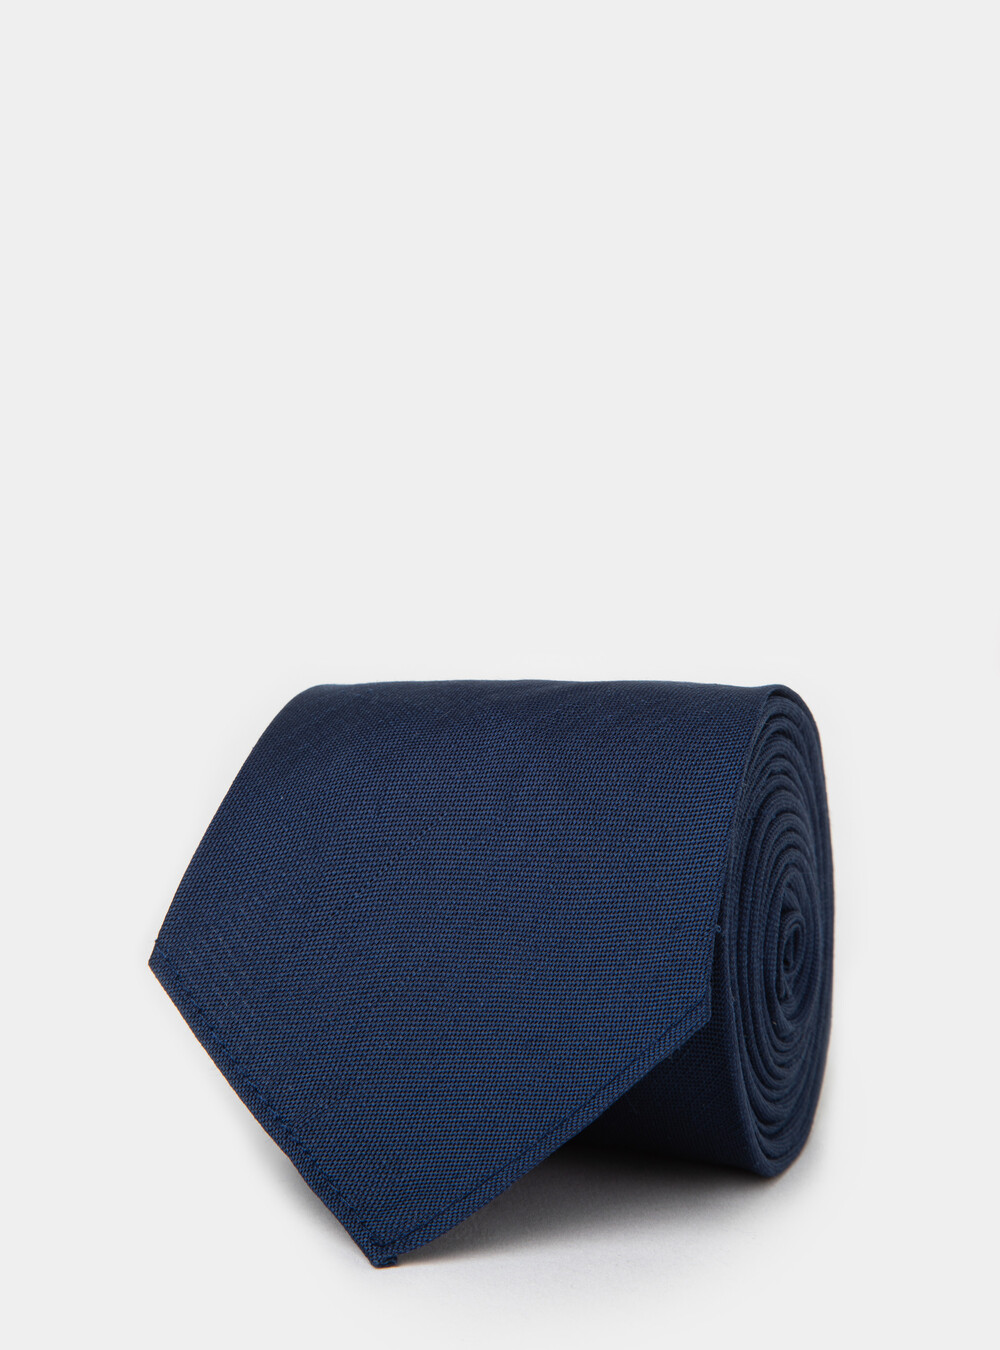 Cravate en soie et lin | GutteridgeEU | Cravates Uomo